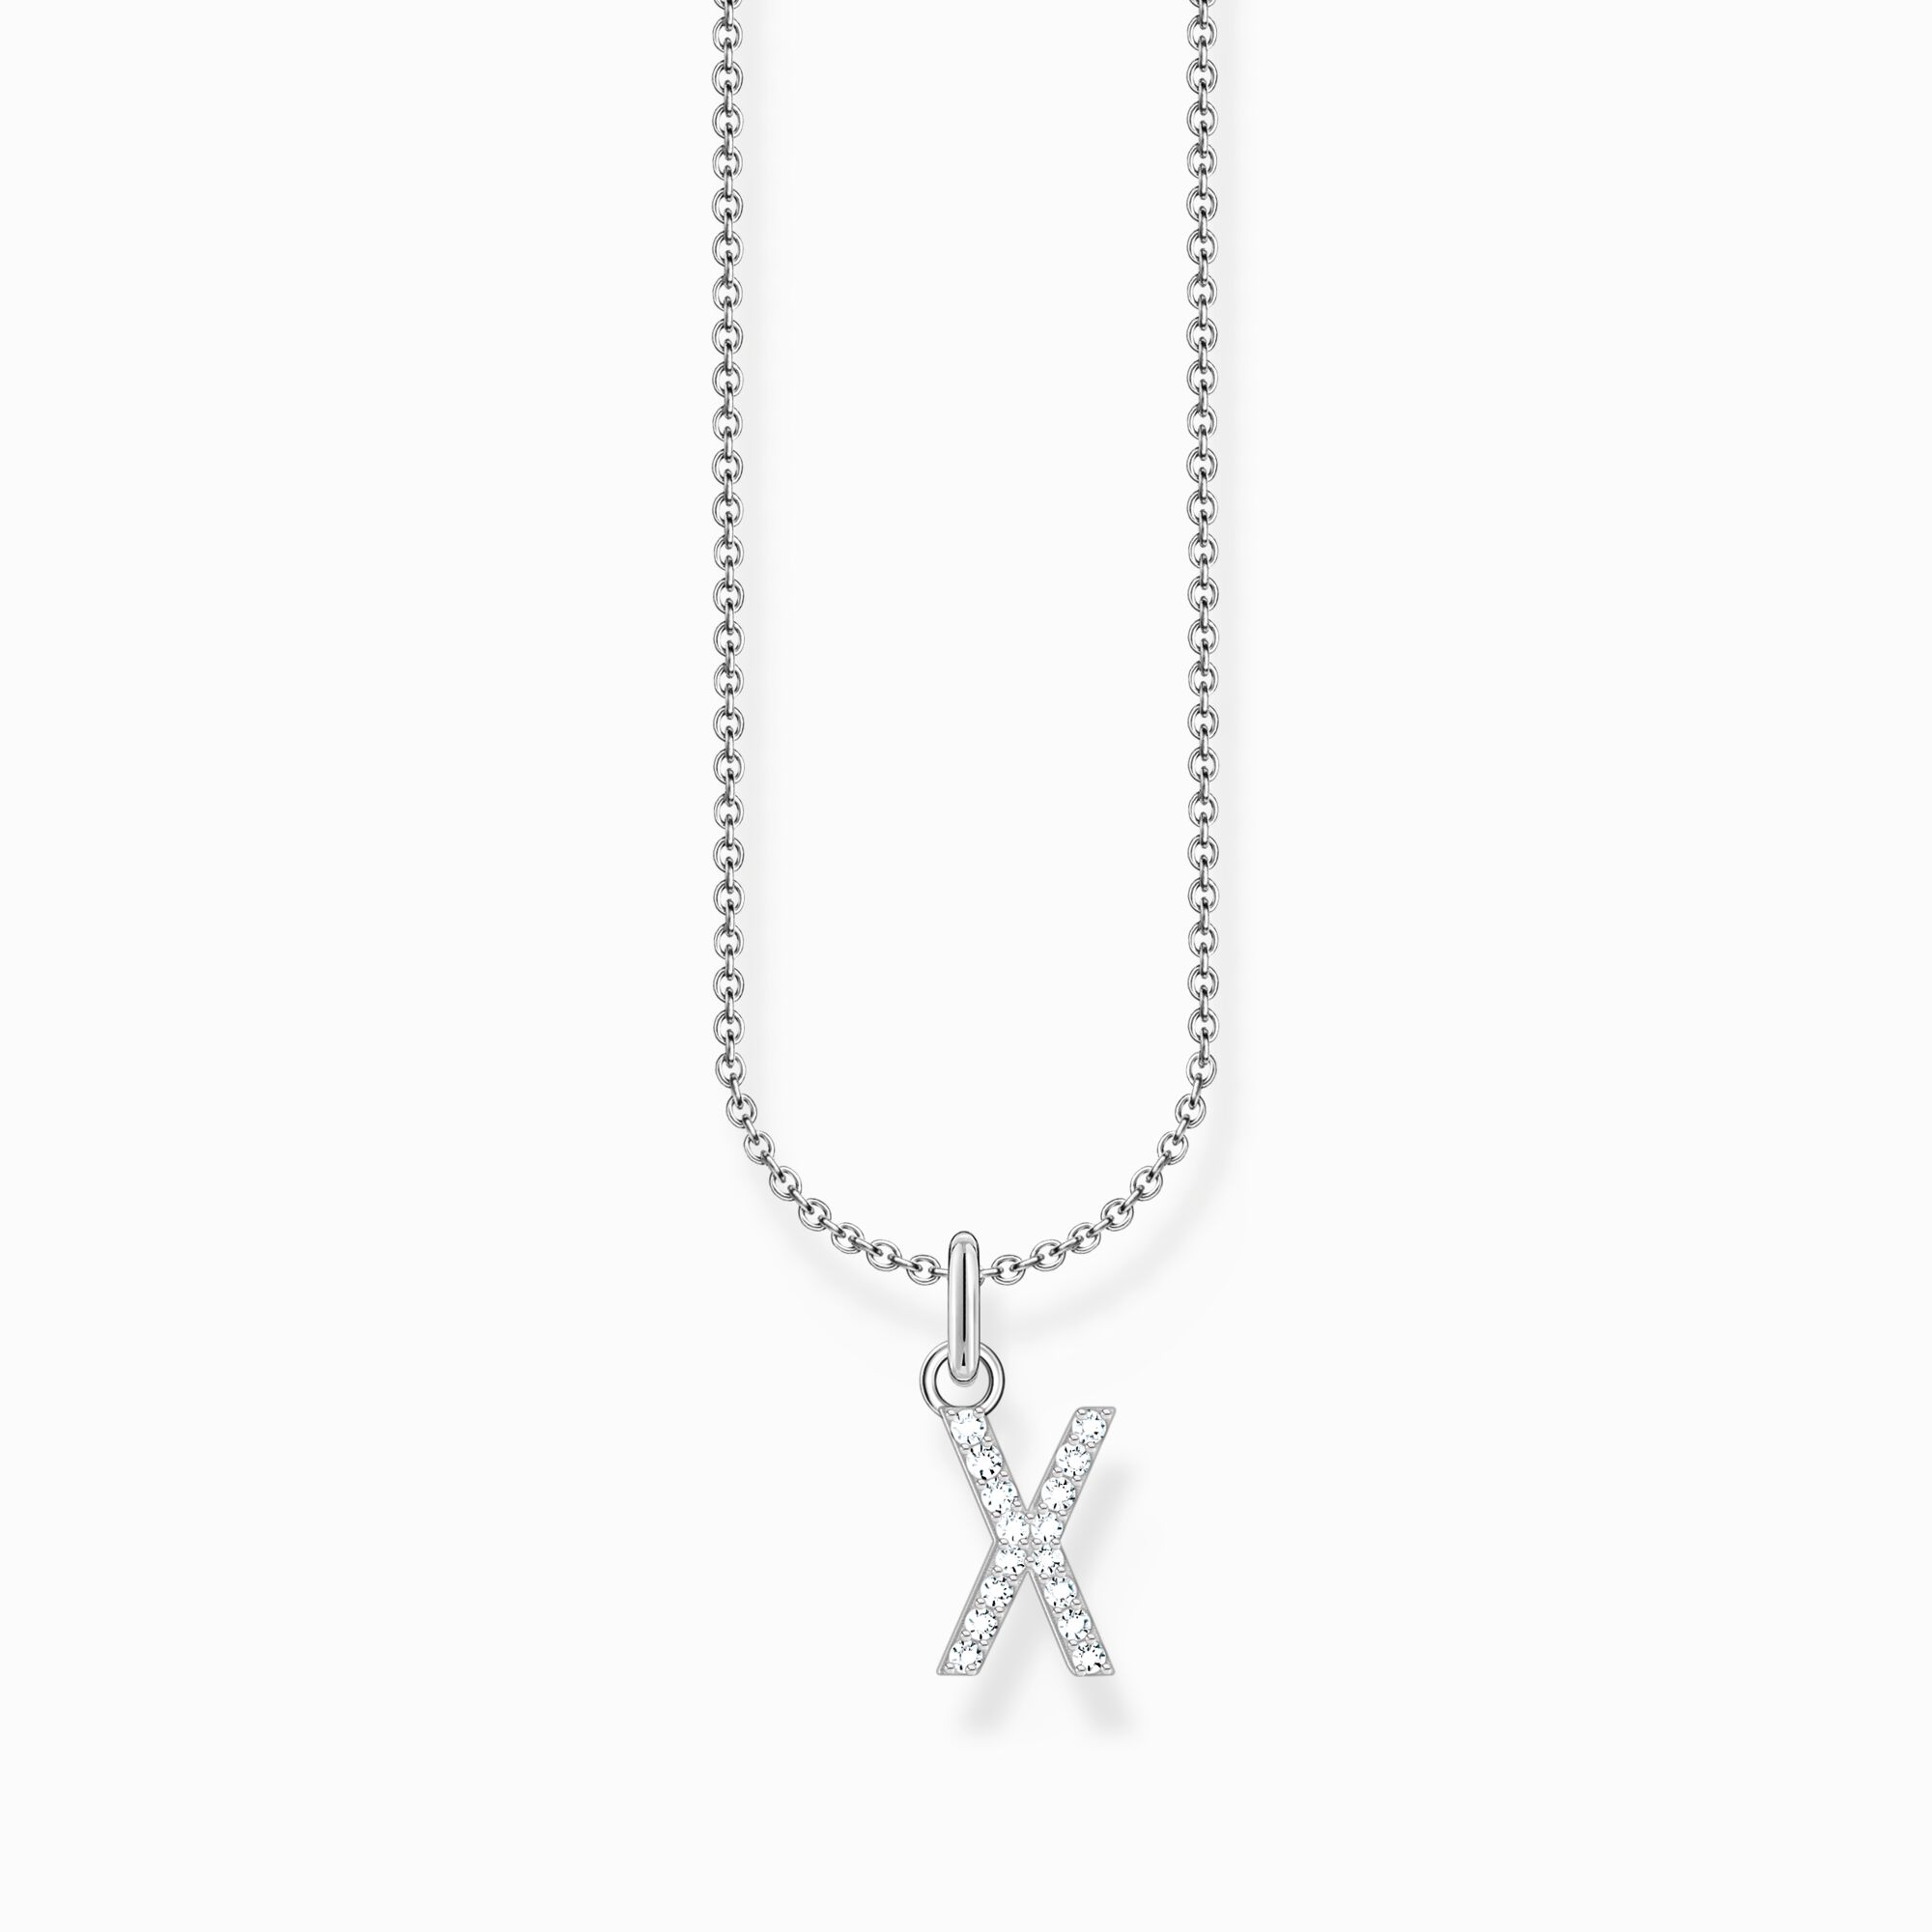 Halsband med bokstaven X, silver ur kollektionen Charming Collection i THOMAS SABO:s onlineshop